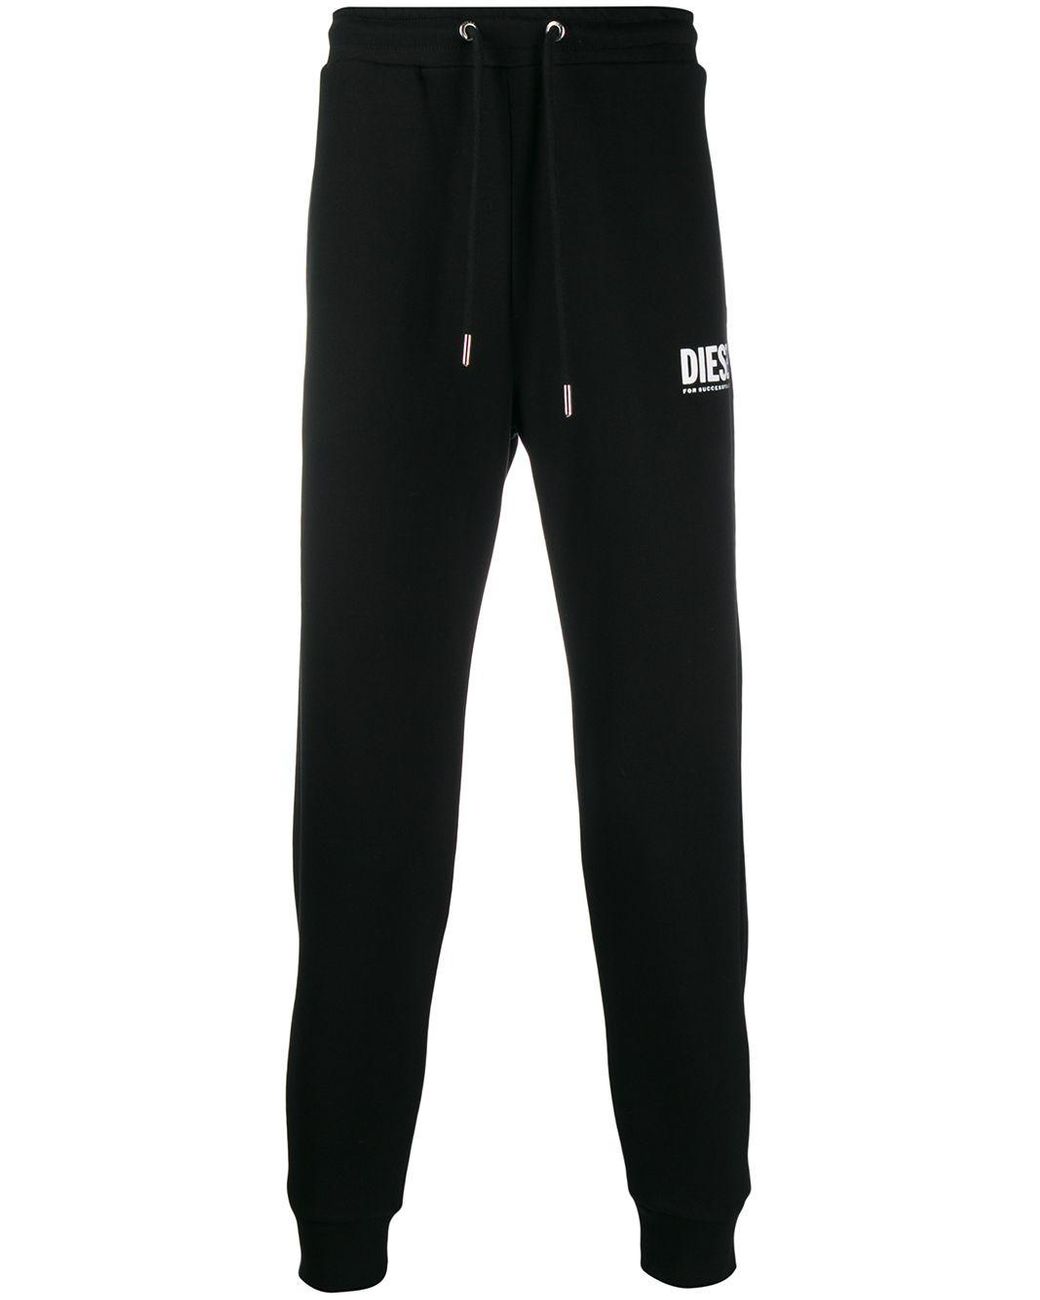 DIESEL Denim Logo Track Pants in Black for Men - Lyst